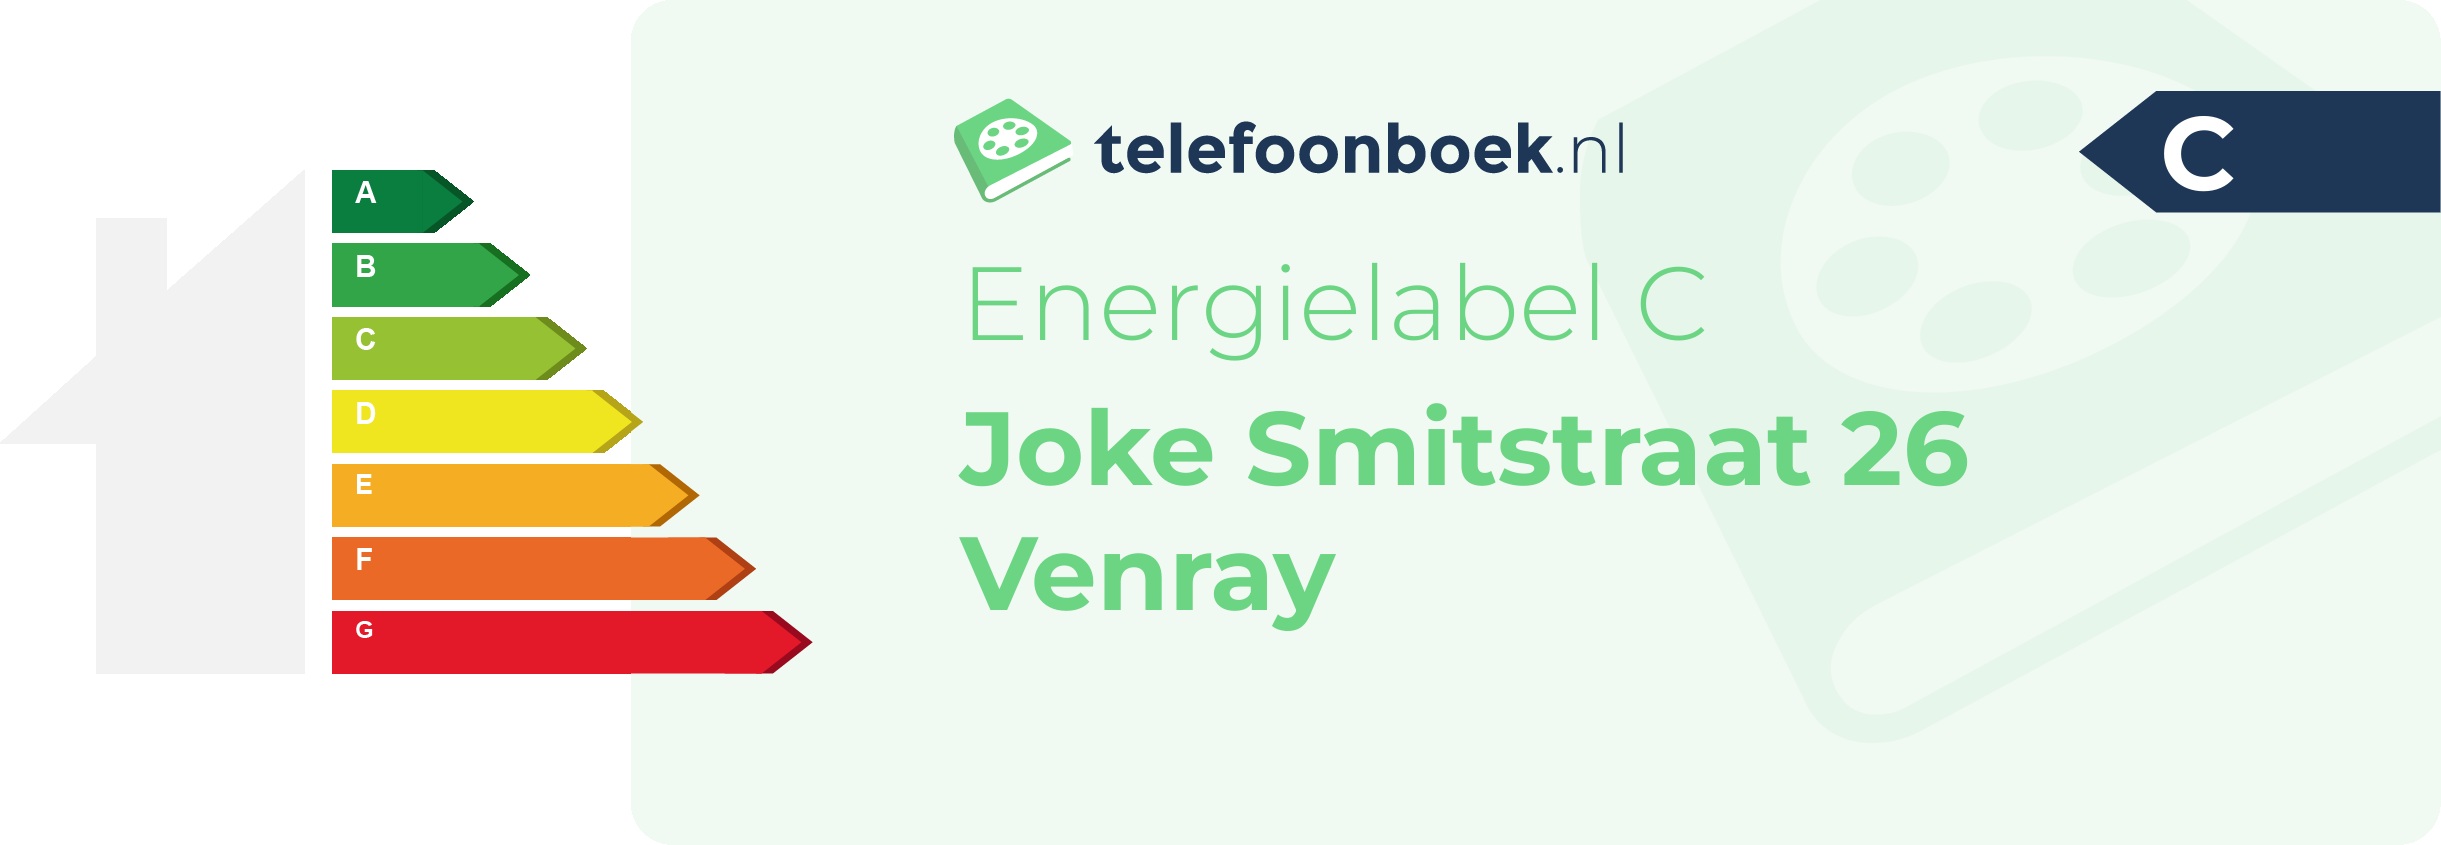 Energielabel Joke Smitstraat 26 Venray